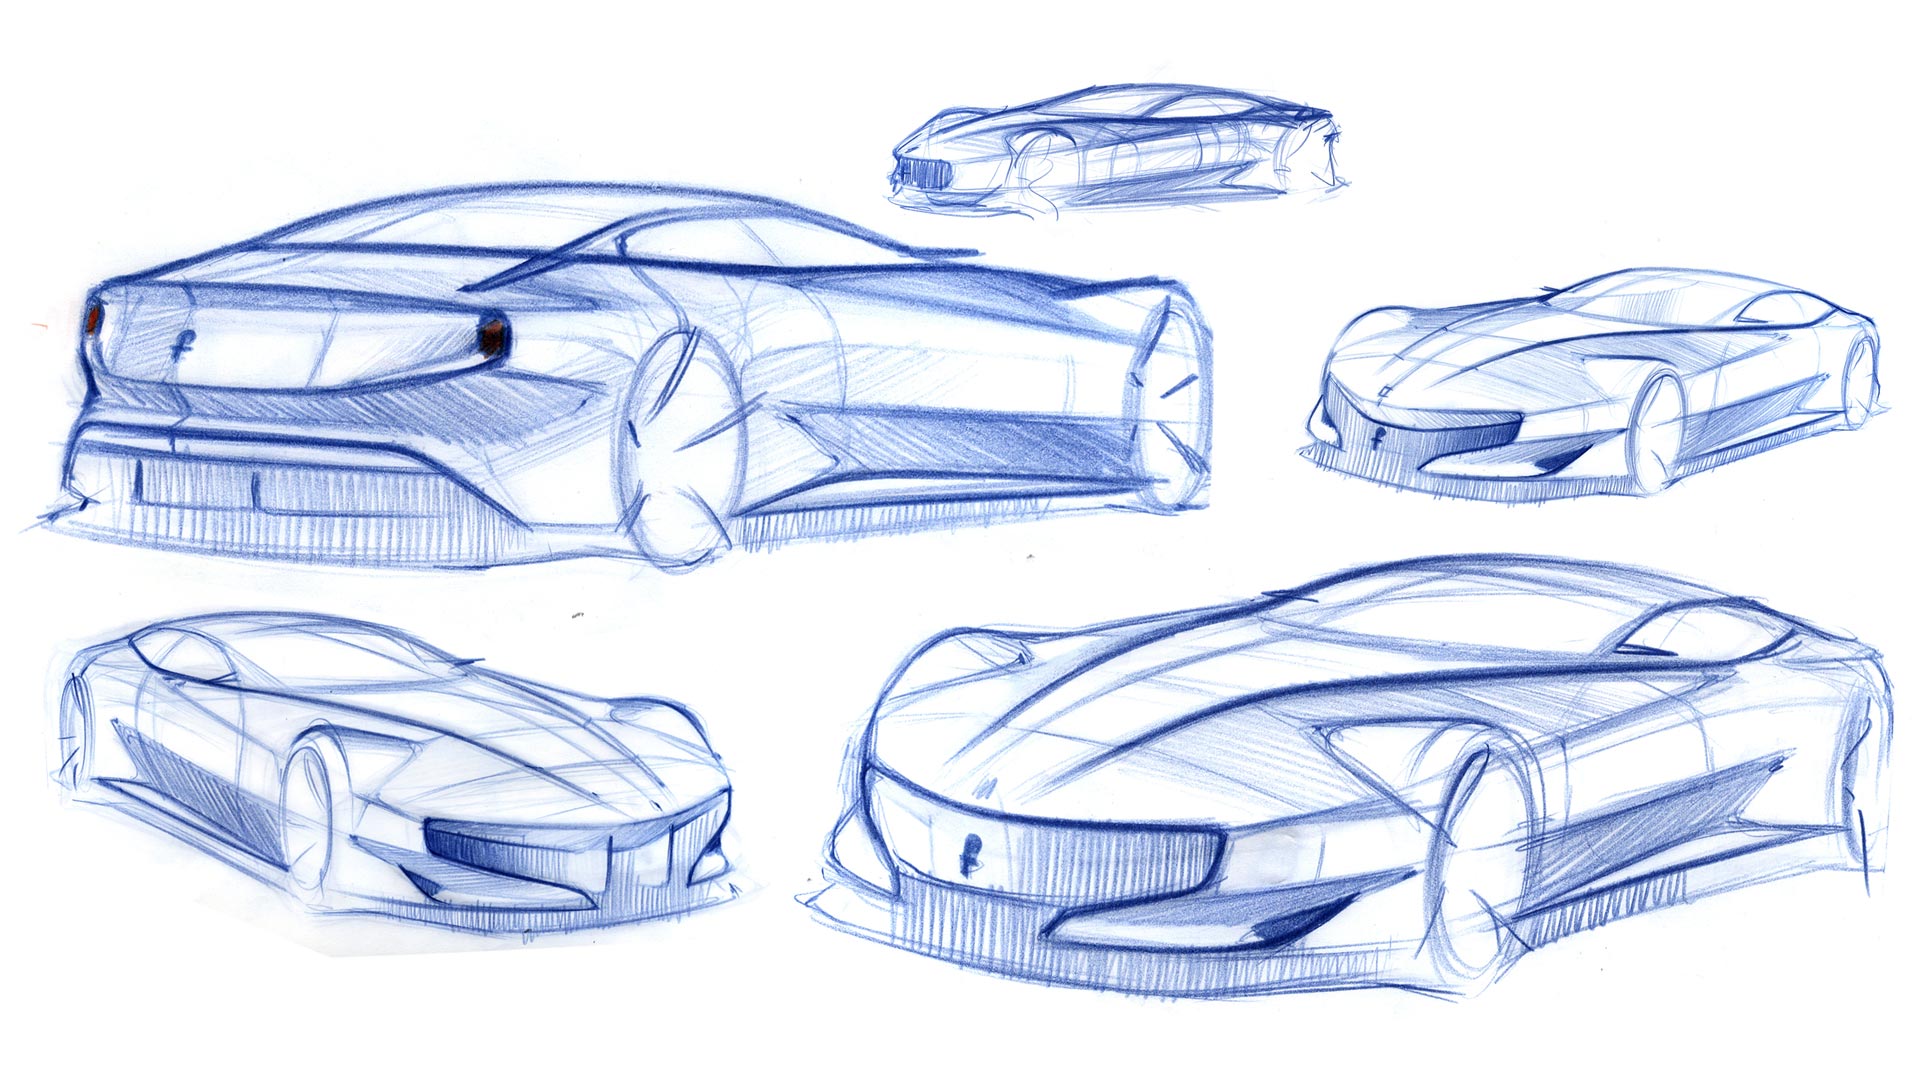 Pininfarina Cambiano, 2012 - Design Sketches